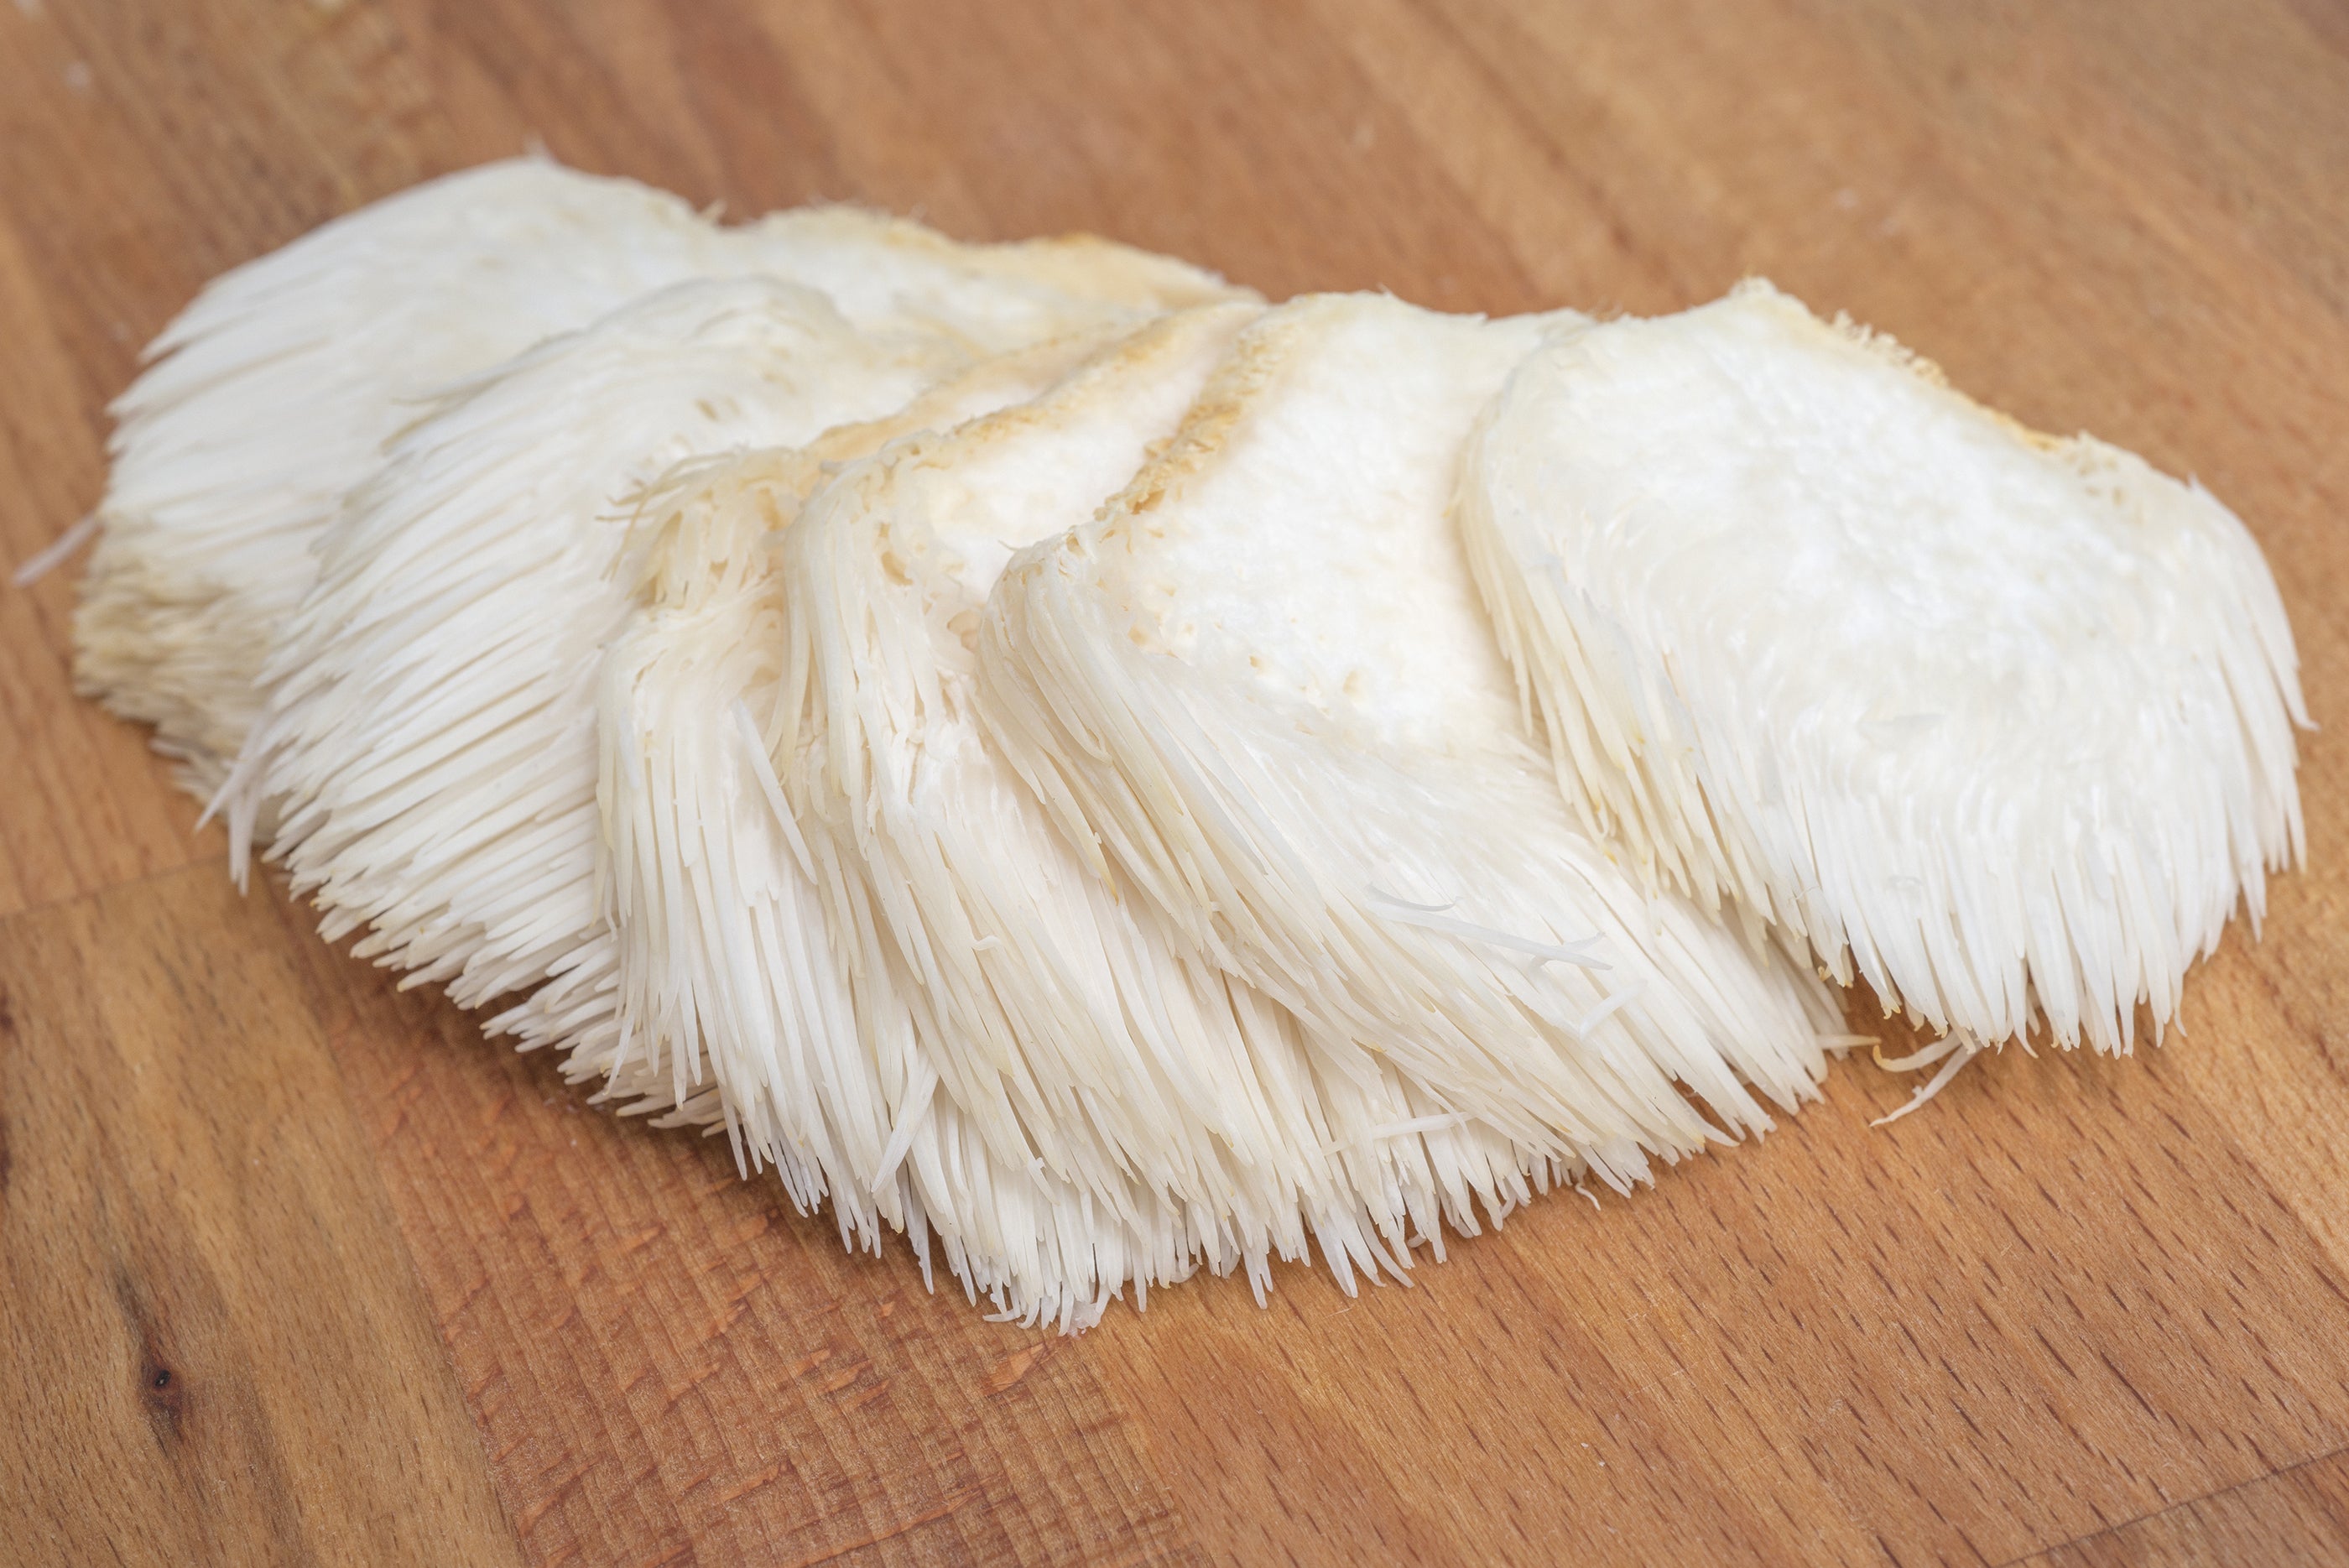 High Protein Mushrooms - Mushroom Revival - Lion's mane mushroom